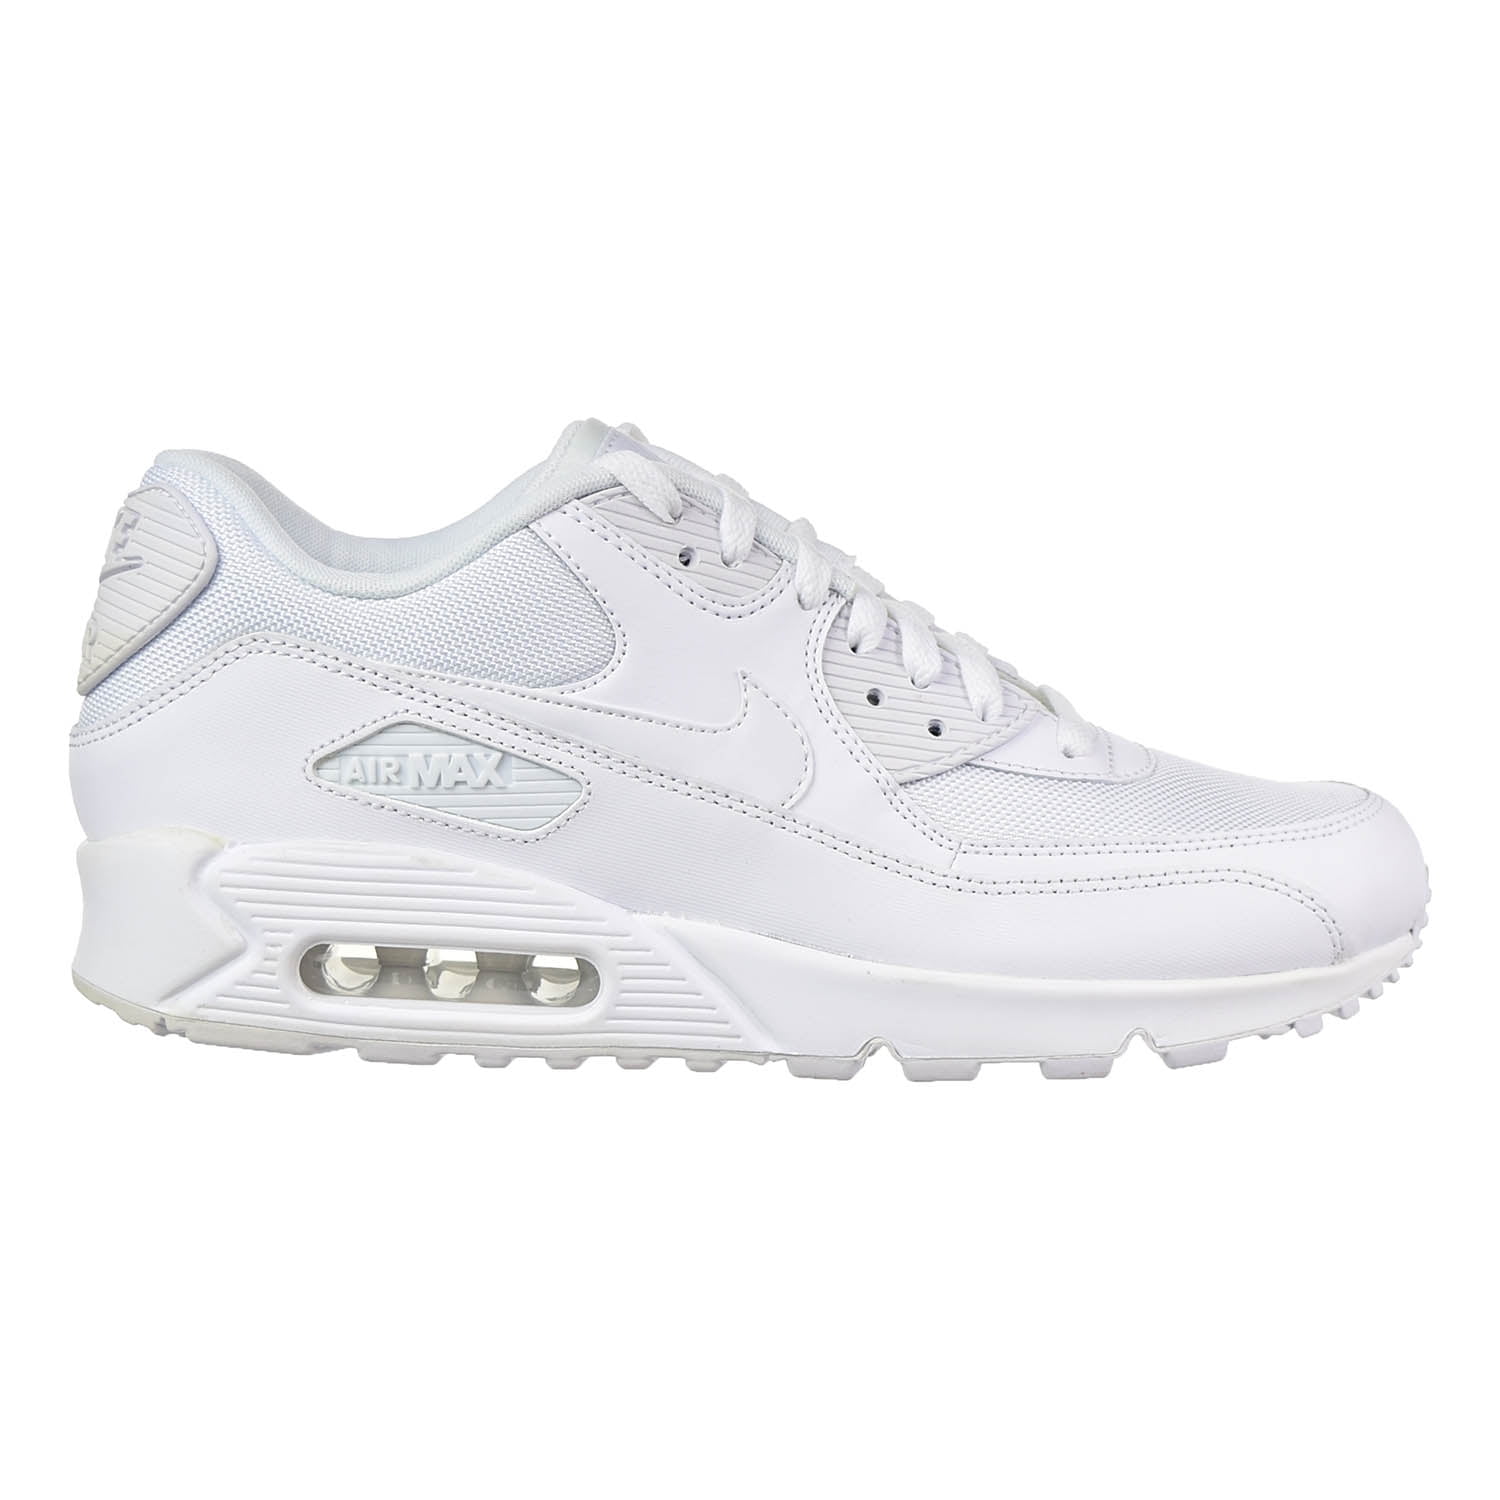 Amado rechazo Húmedo Nike Air Max 90 Essential Men's Shoes White/White 537384-111 - Walmart.com